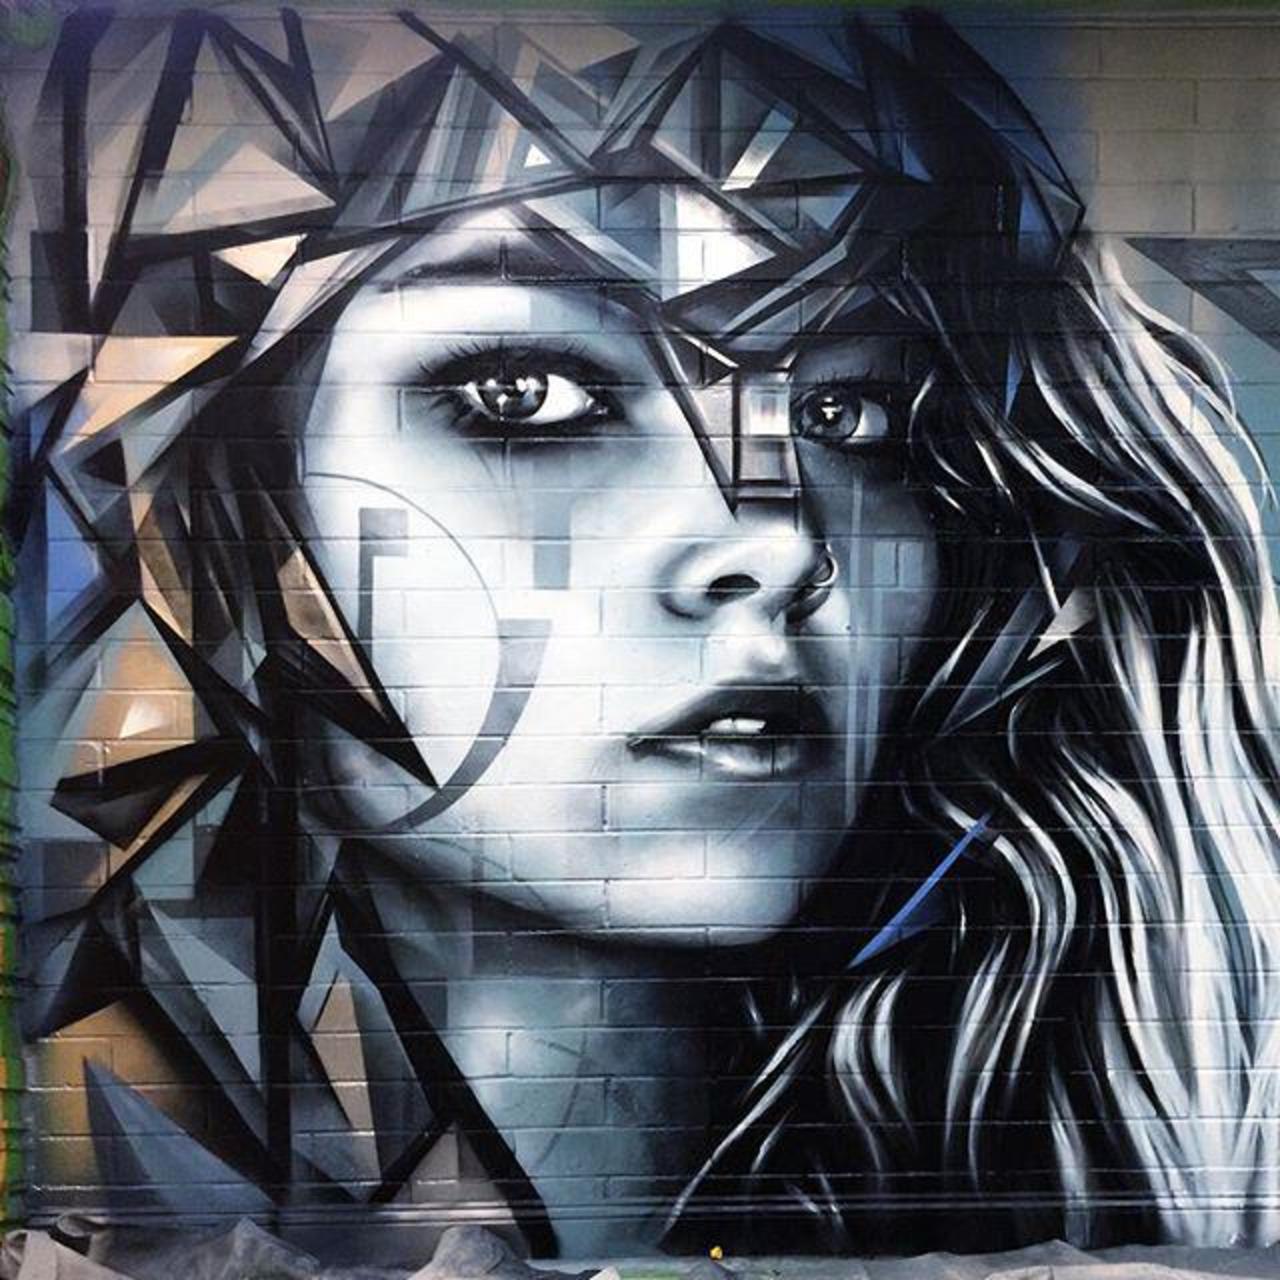 RT @DlgermanyDavid: Christina Angelina & easeonetx #art #streetart #urbanart #graffiti via @cakozlem76 http://t.co/phye3kqvYx